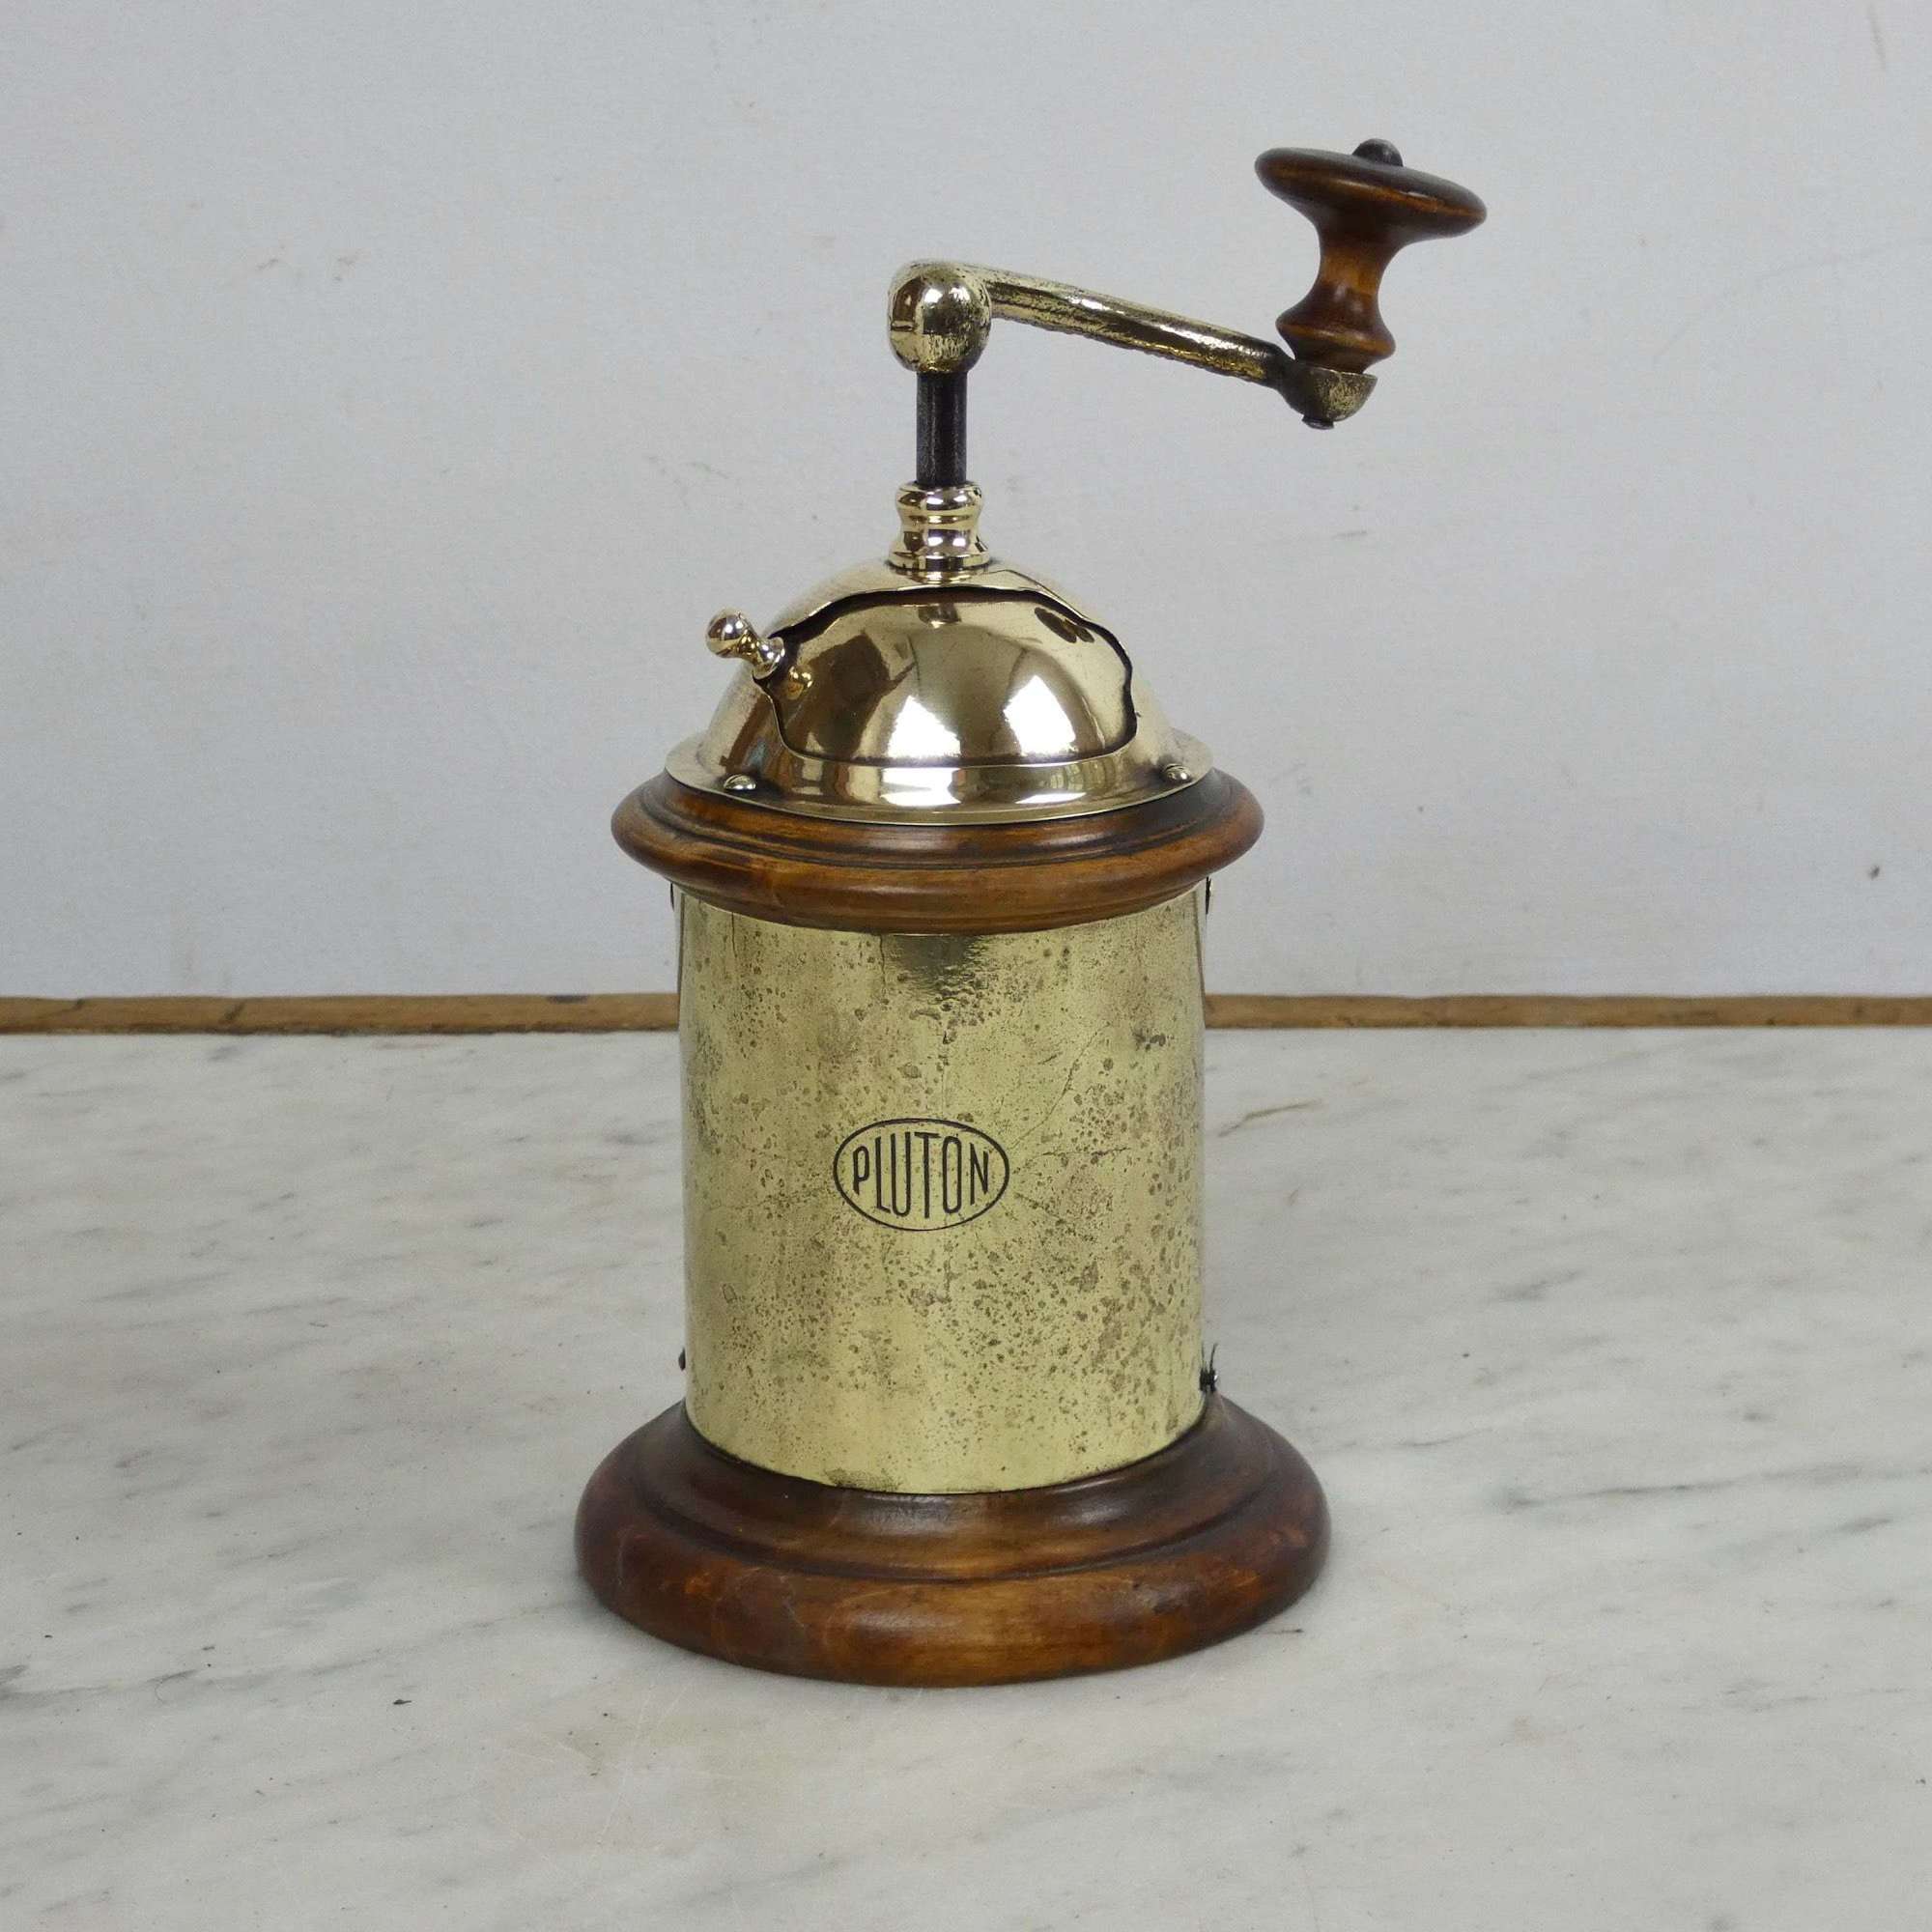 Brass coffee or pepper grinder